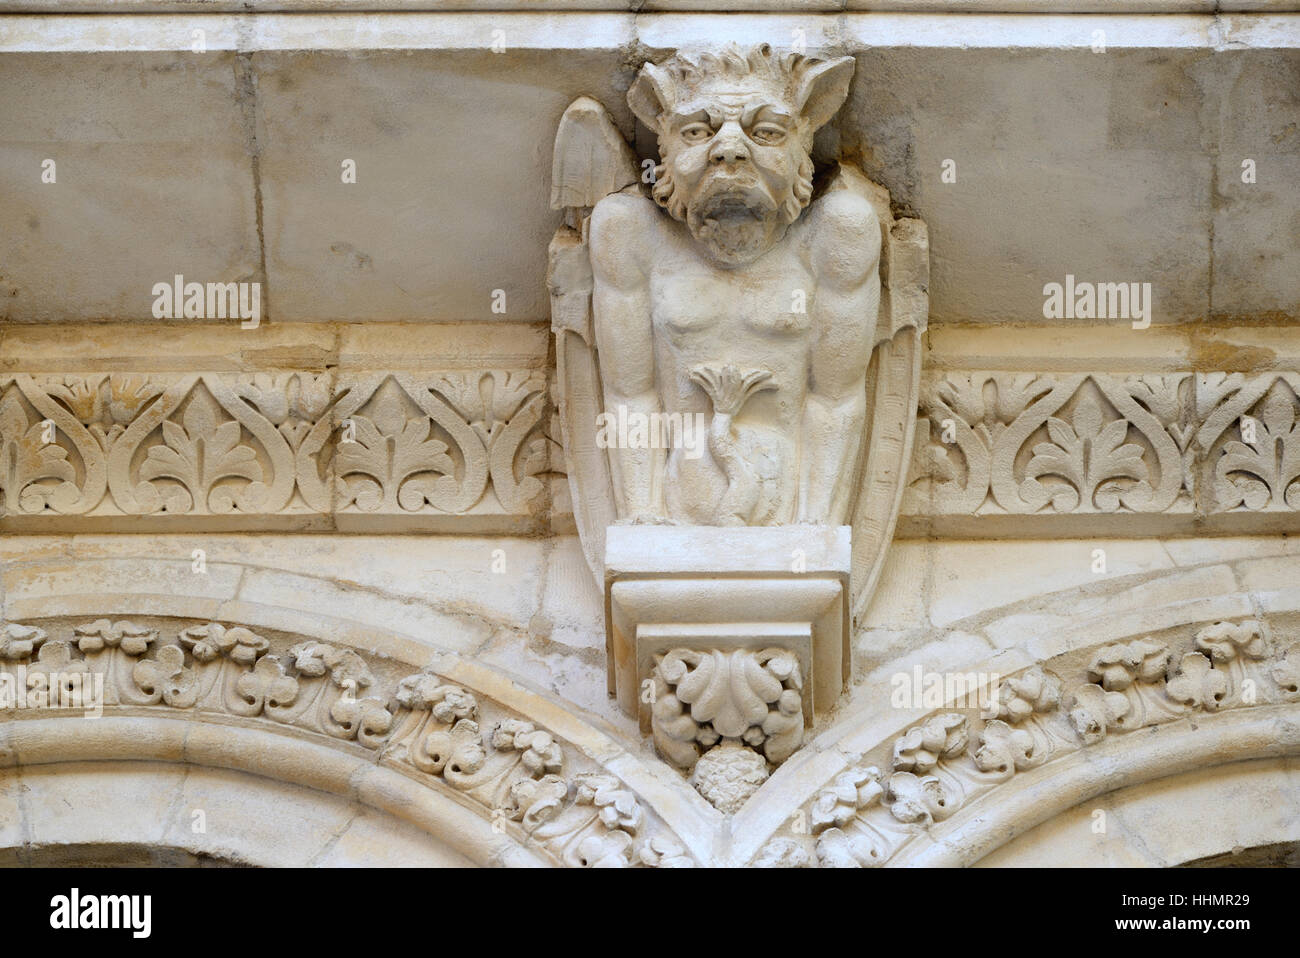 Scolpiti Elf-Like Monster, staffa di marmo o Gargoyle figura Chateau de la Buzine (de Pagnol) Marseille Foto Stock